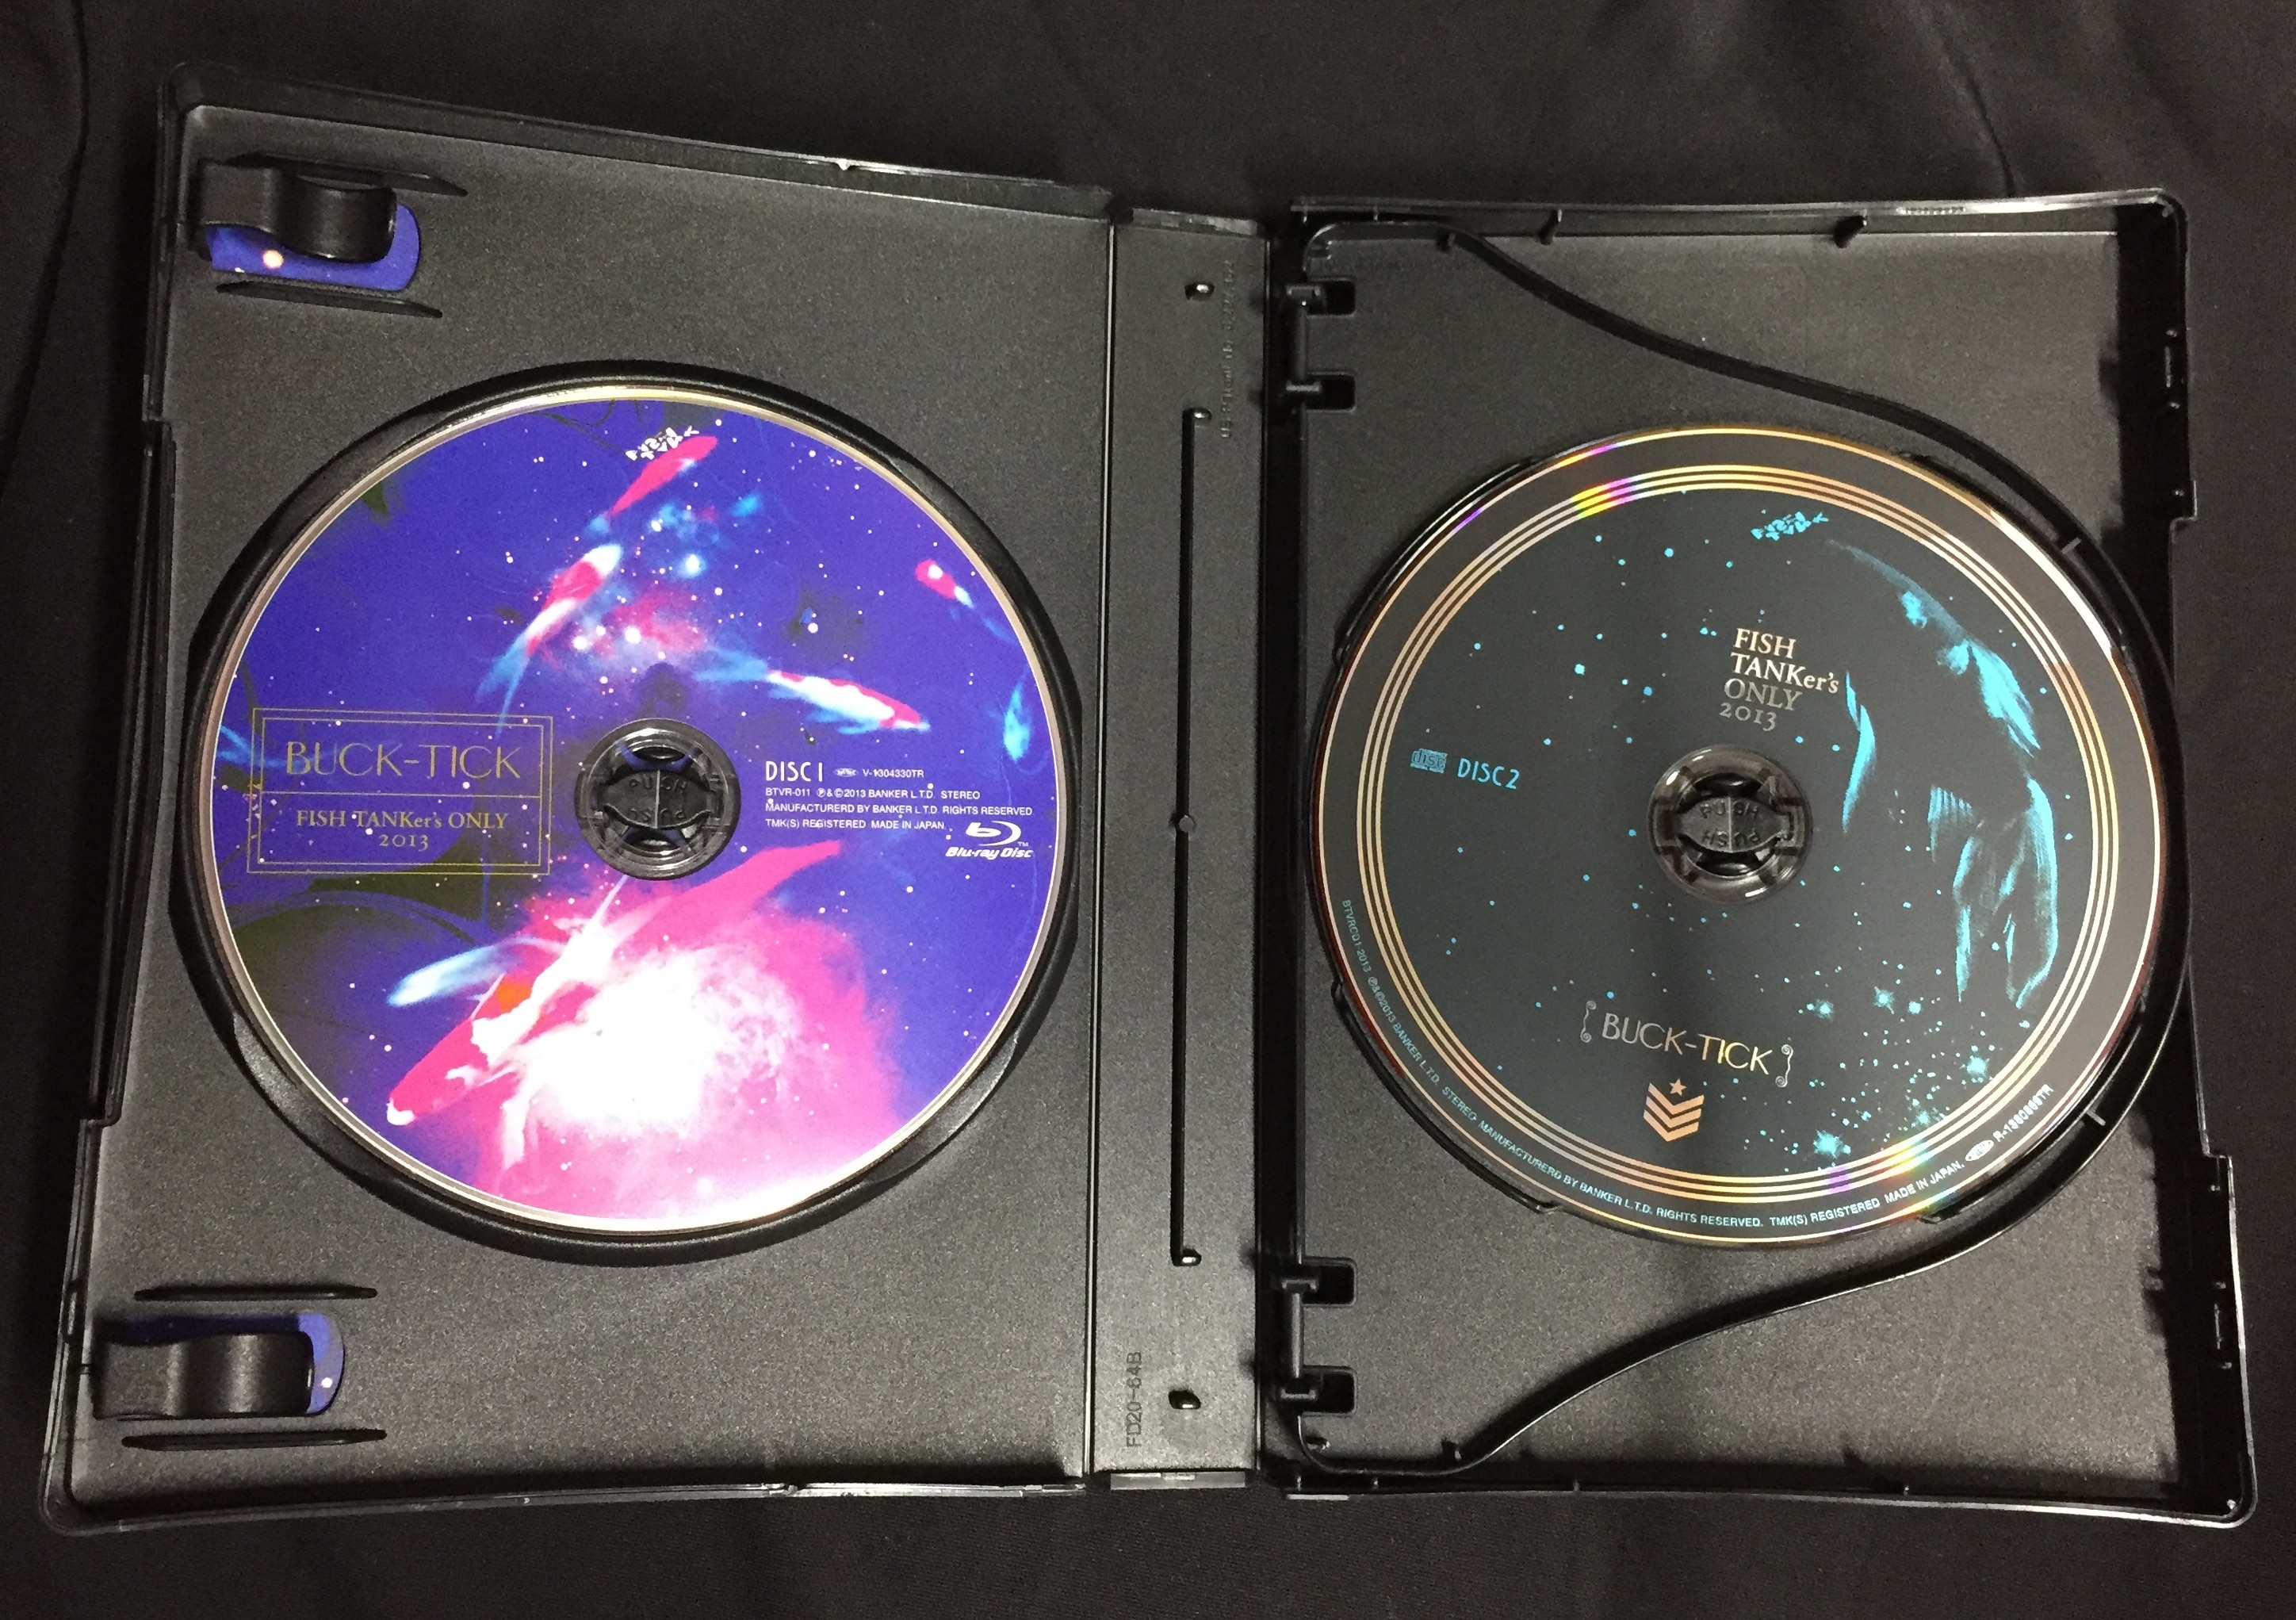 FC限定ブルーレイBOXBUCK-TICK/FISH 2013+2014/Blu-ray+CD